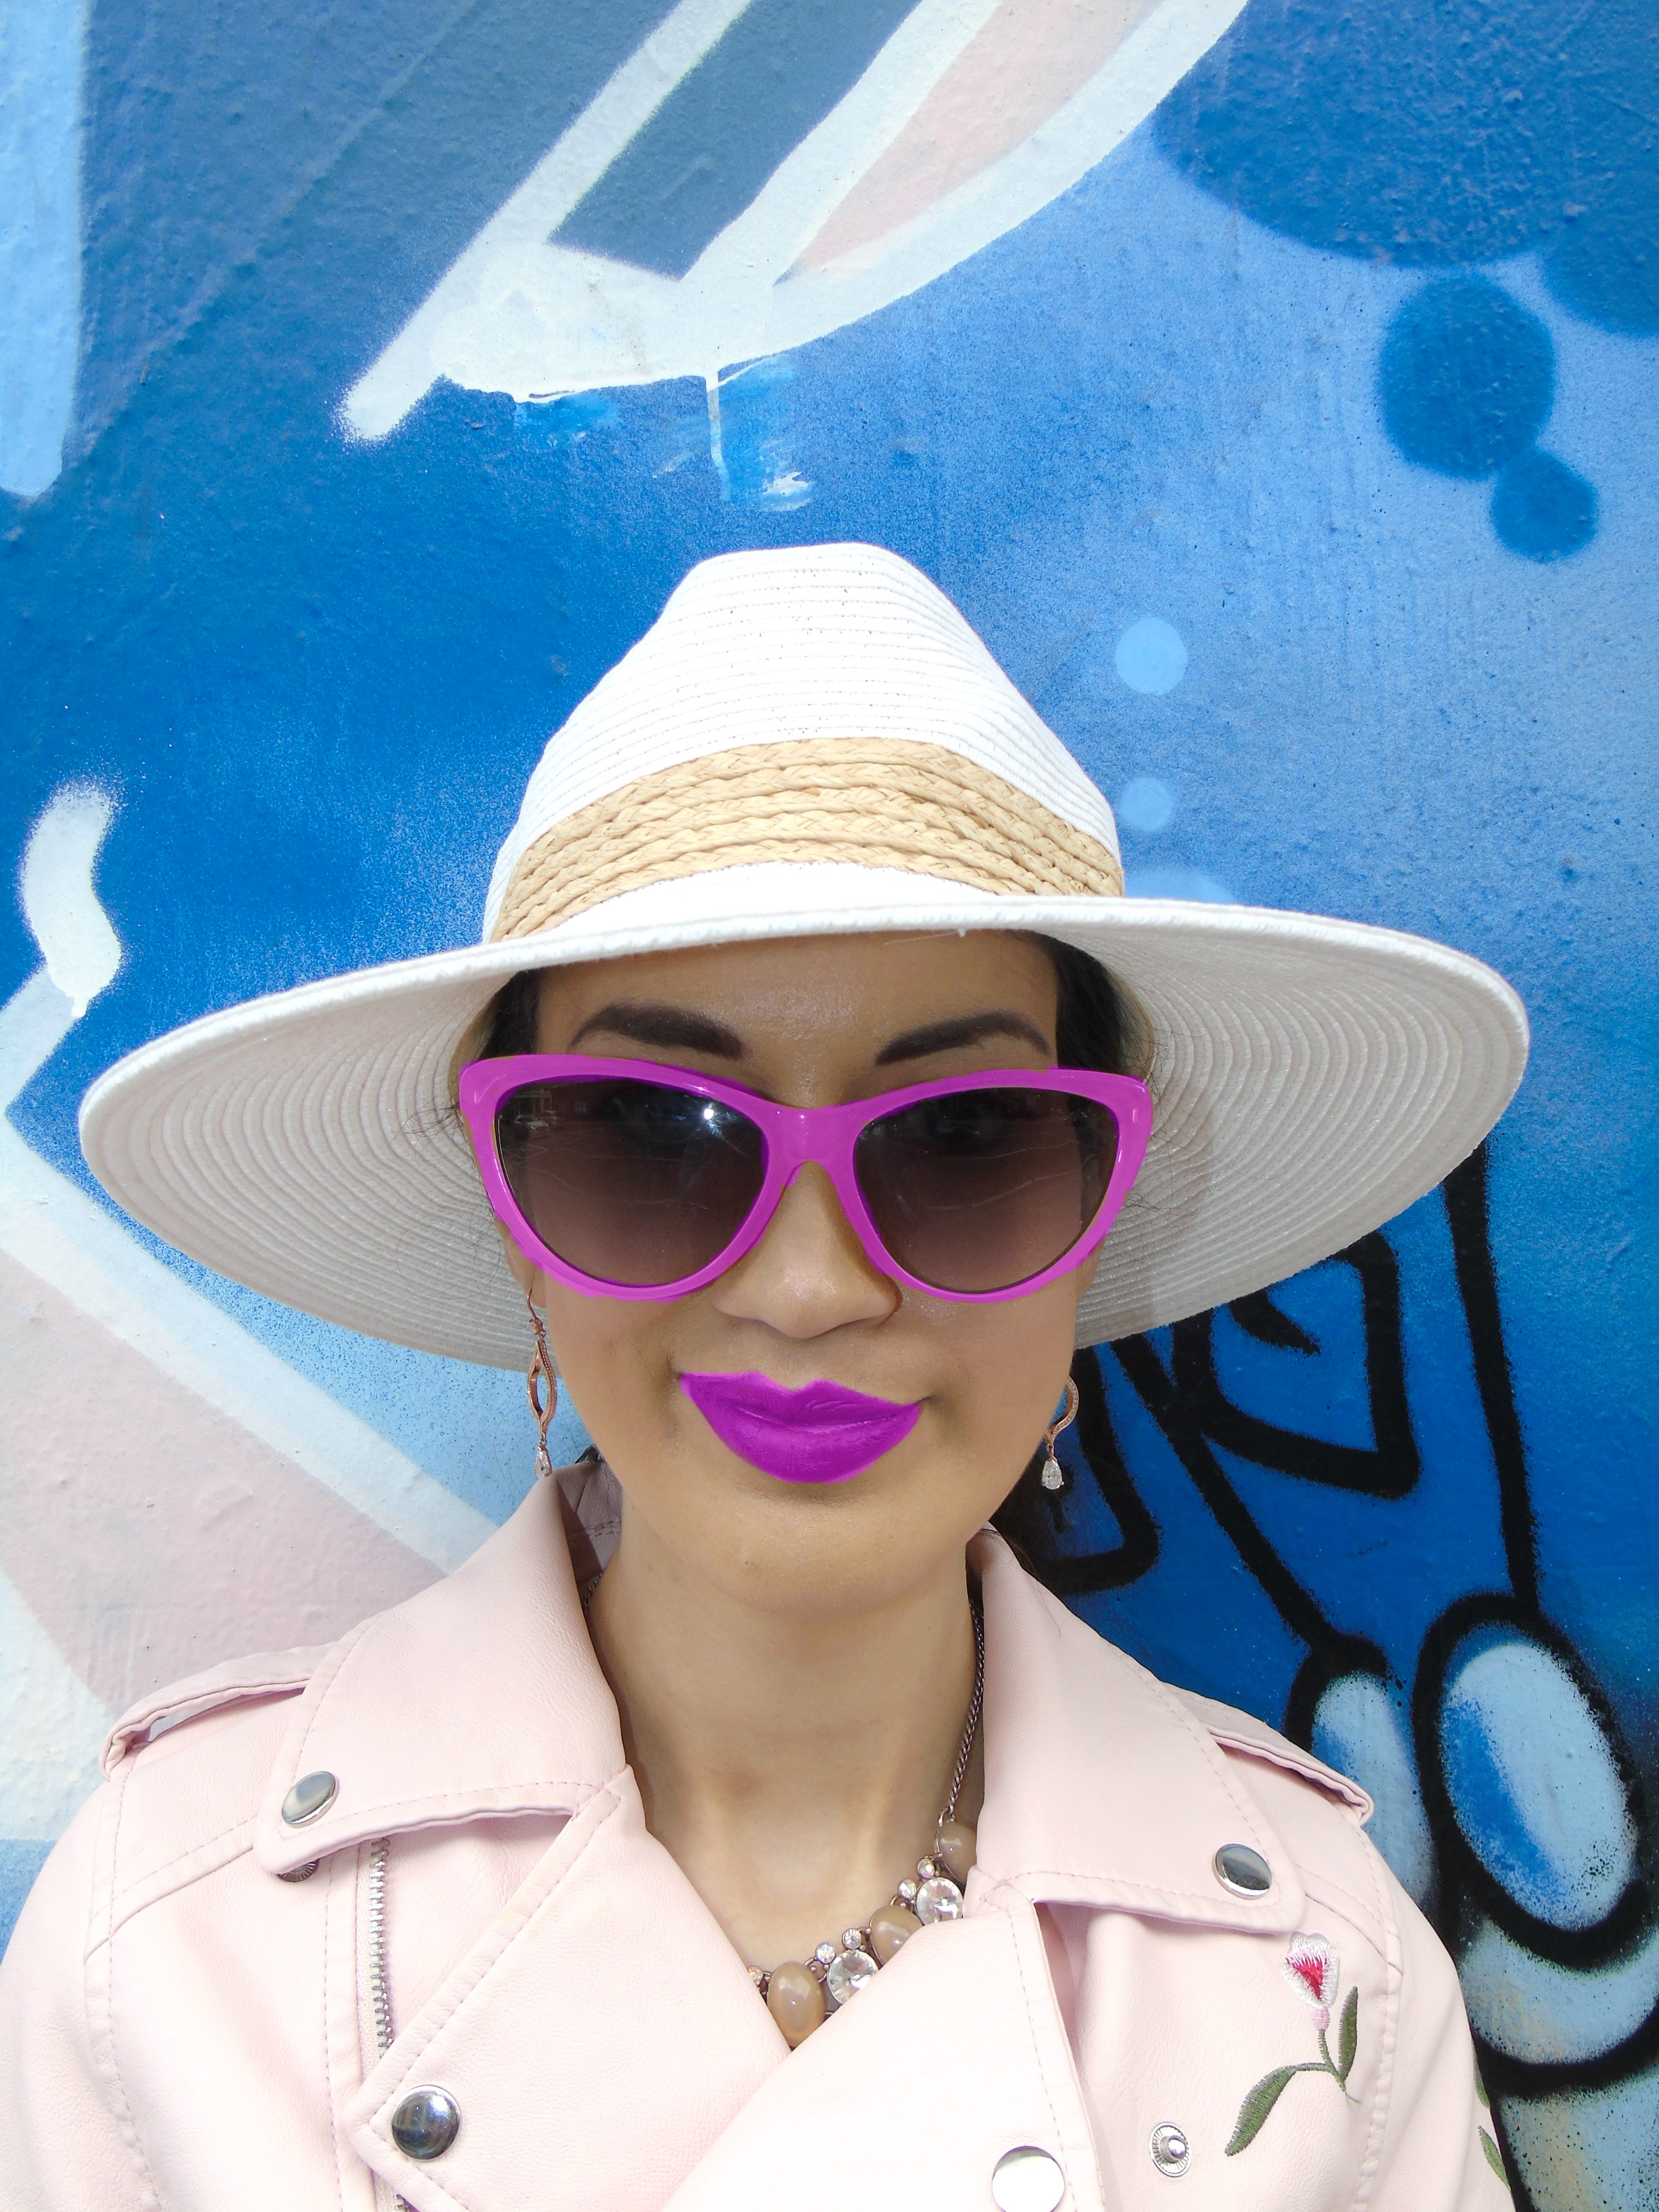 <img src="ana.jpg" alt="ana purple sunglasses 90's minimalism"/> 